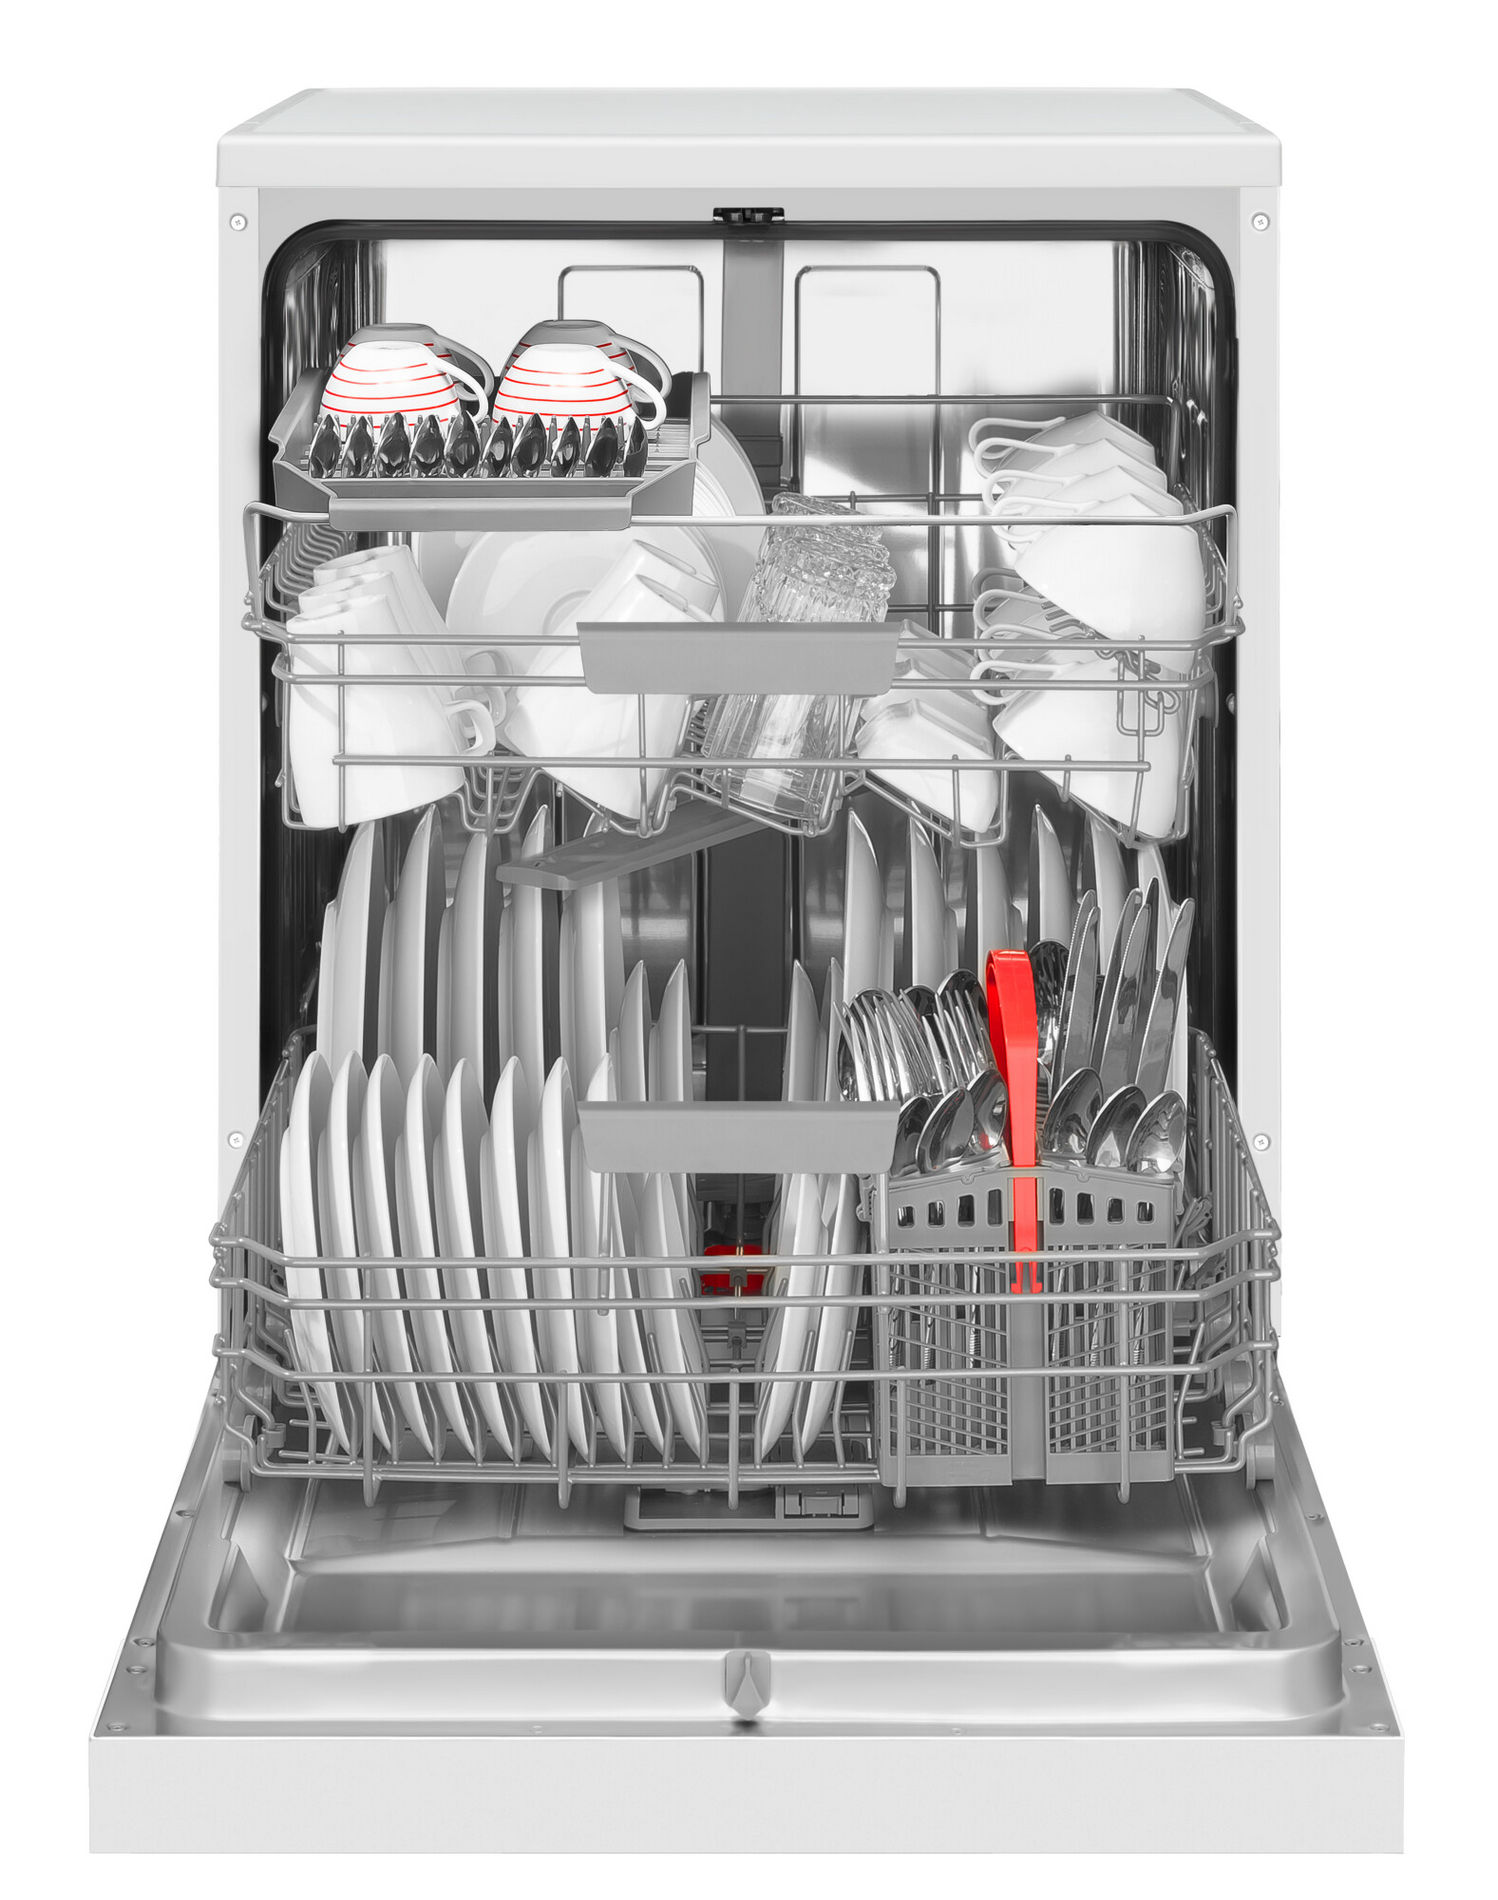 Lavastoviglie Amica DFM62D7TOqWH dishwasher Freestanding 14 place settings D [DFM62D7TOqWH]